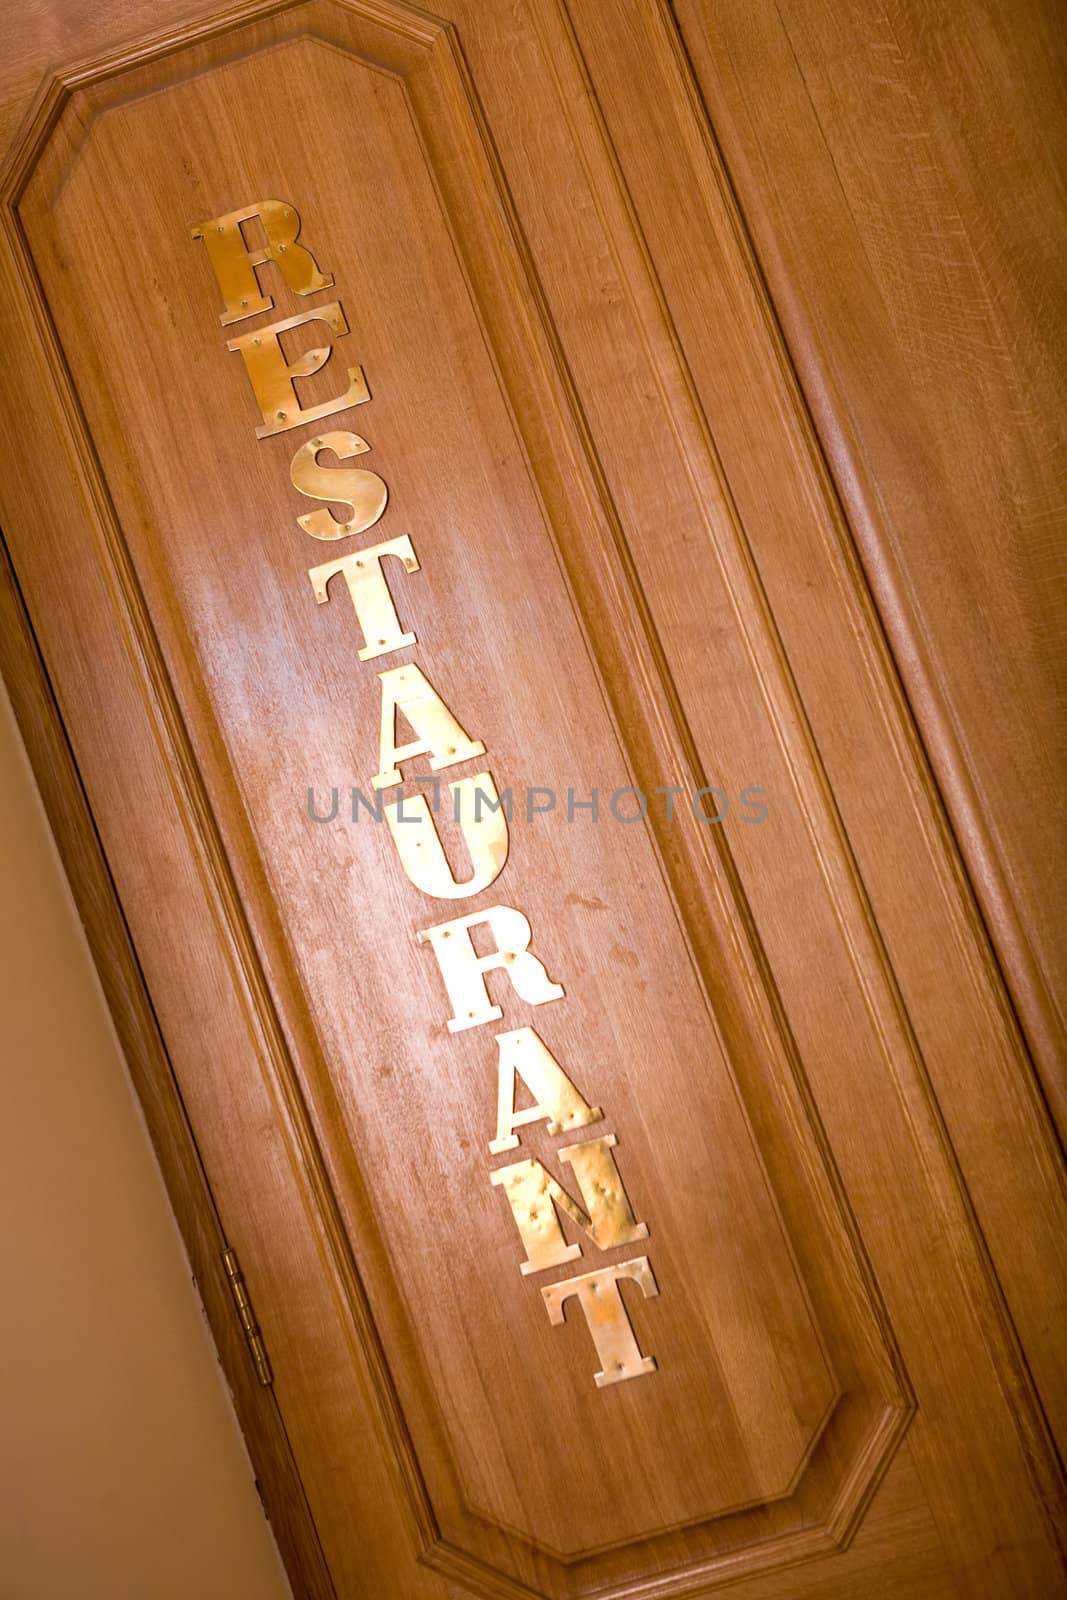 inscription restaurant on the wooden panel